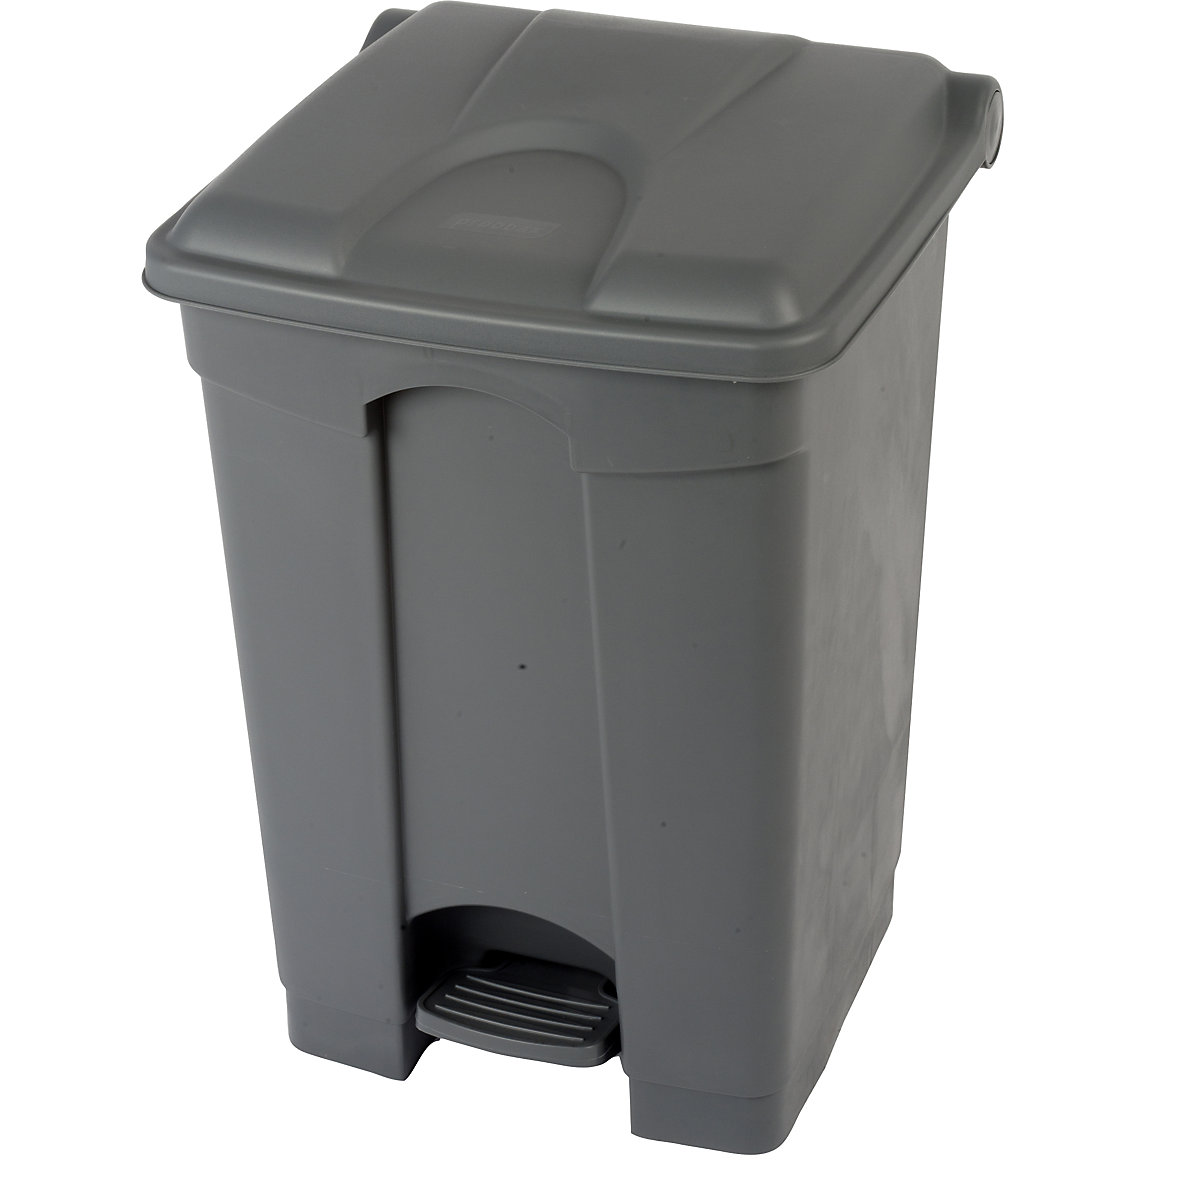 EUROKRAFTbasic – Pedal waste collector, capacity 45 l, WxHxD 410 x 600 x 400 mm, grey